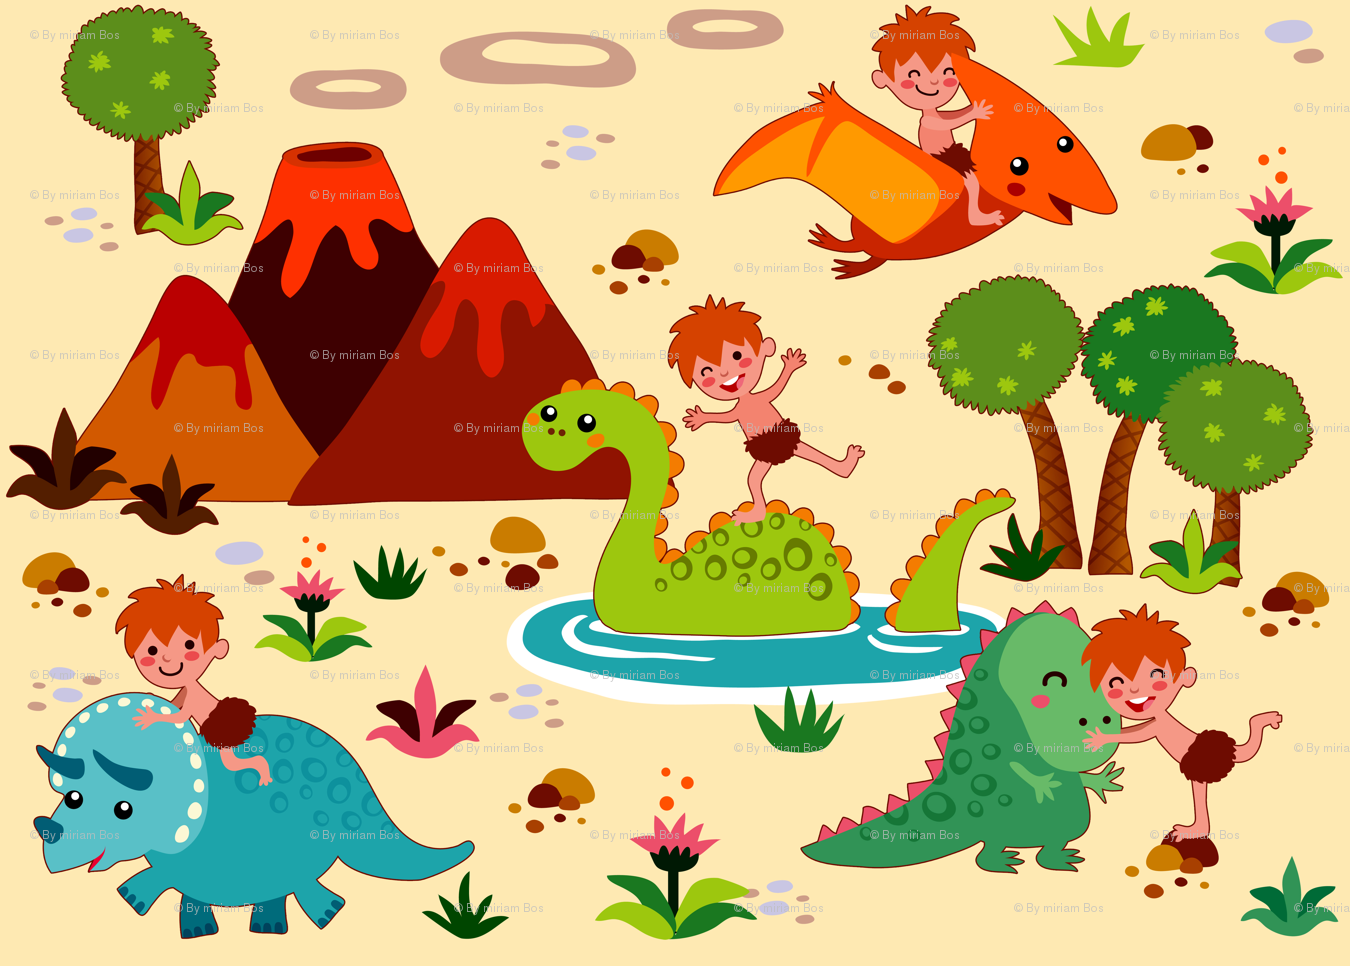 69+] Cute Dinosaur Backgrounds - WallpaperSafari